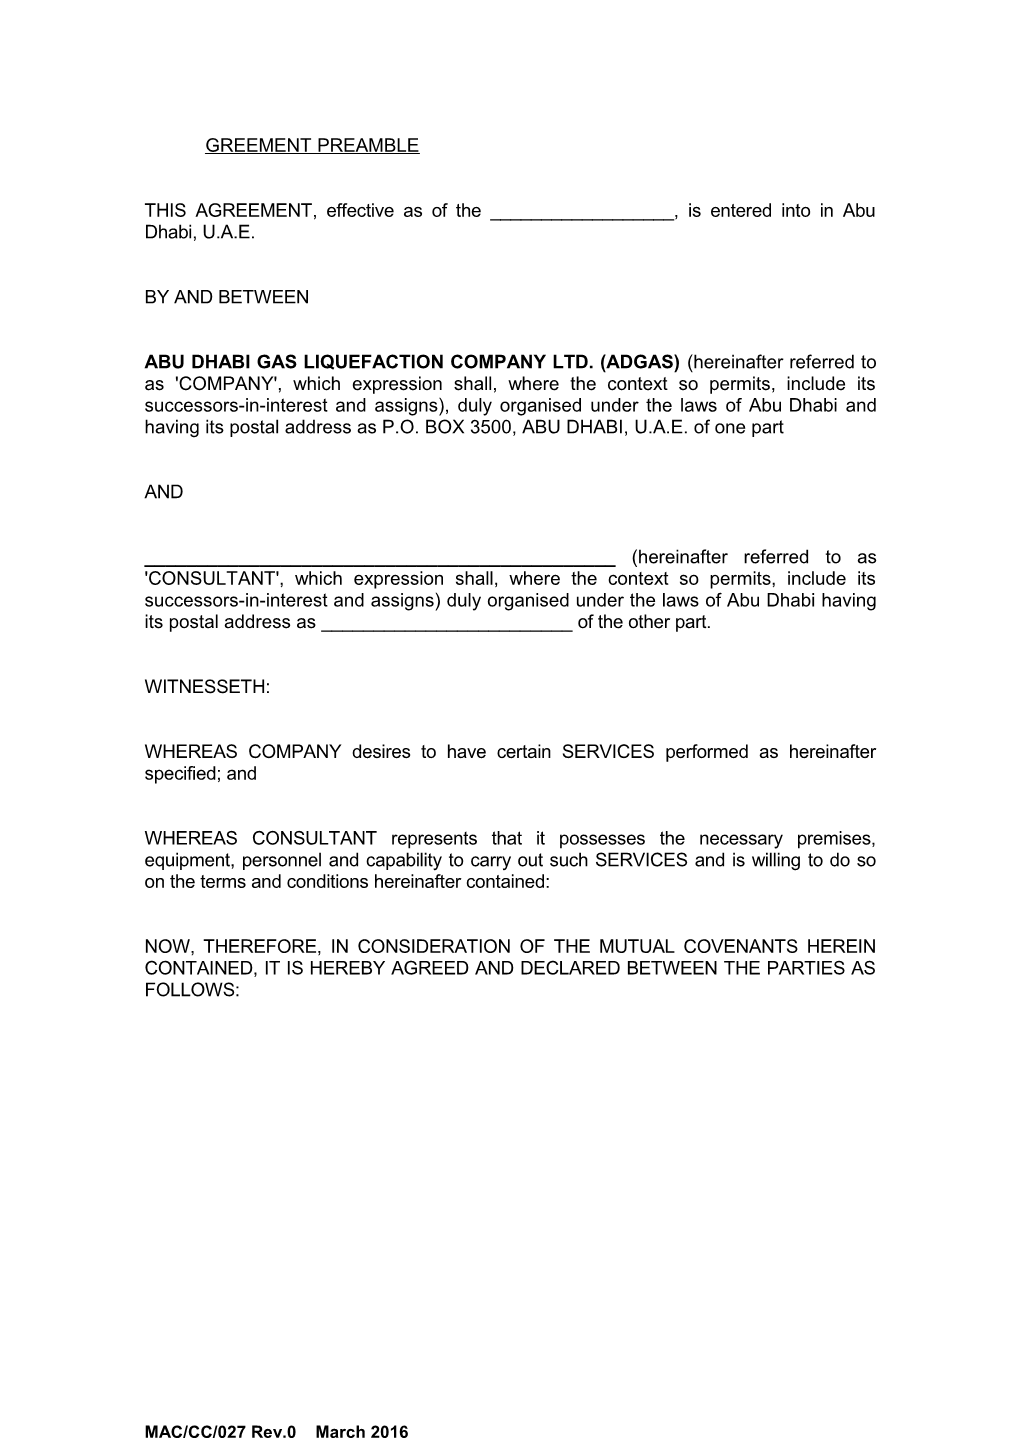 Vol B 27 - PMC Contract (Major)